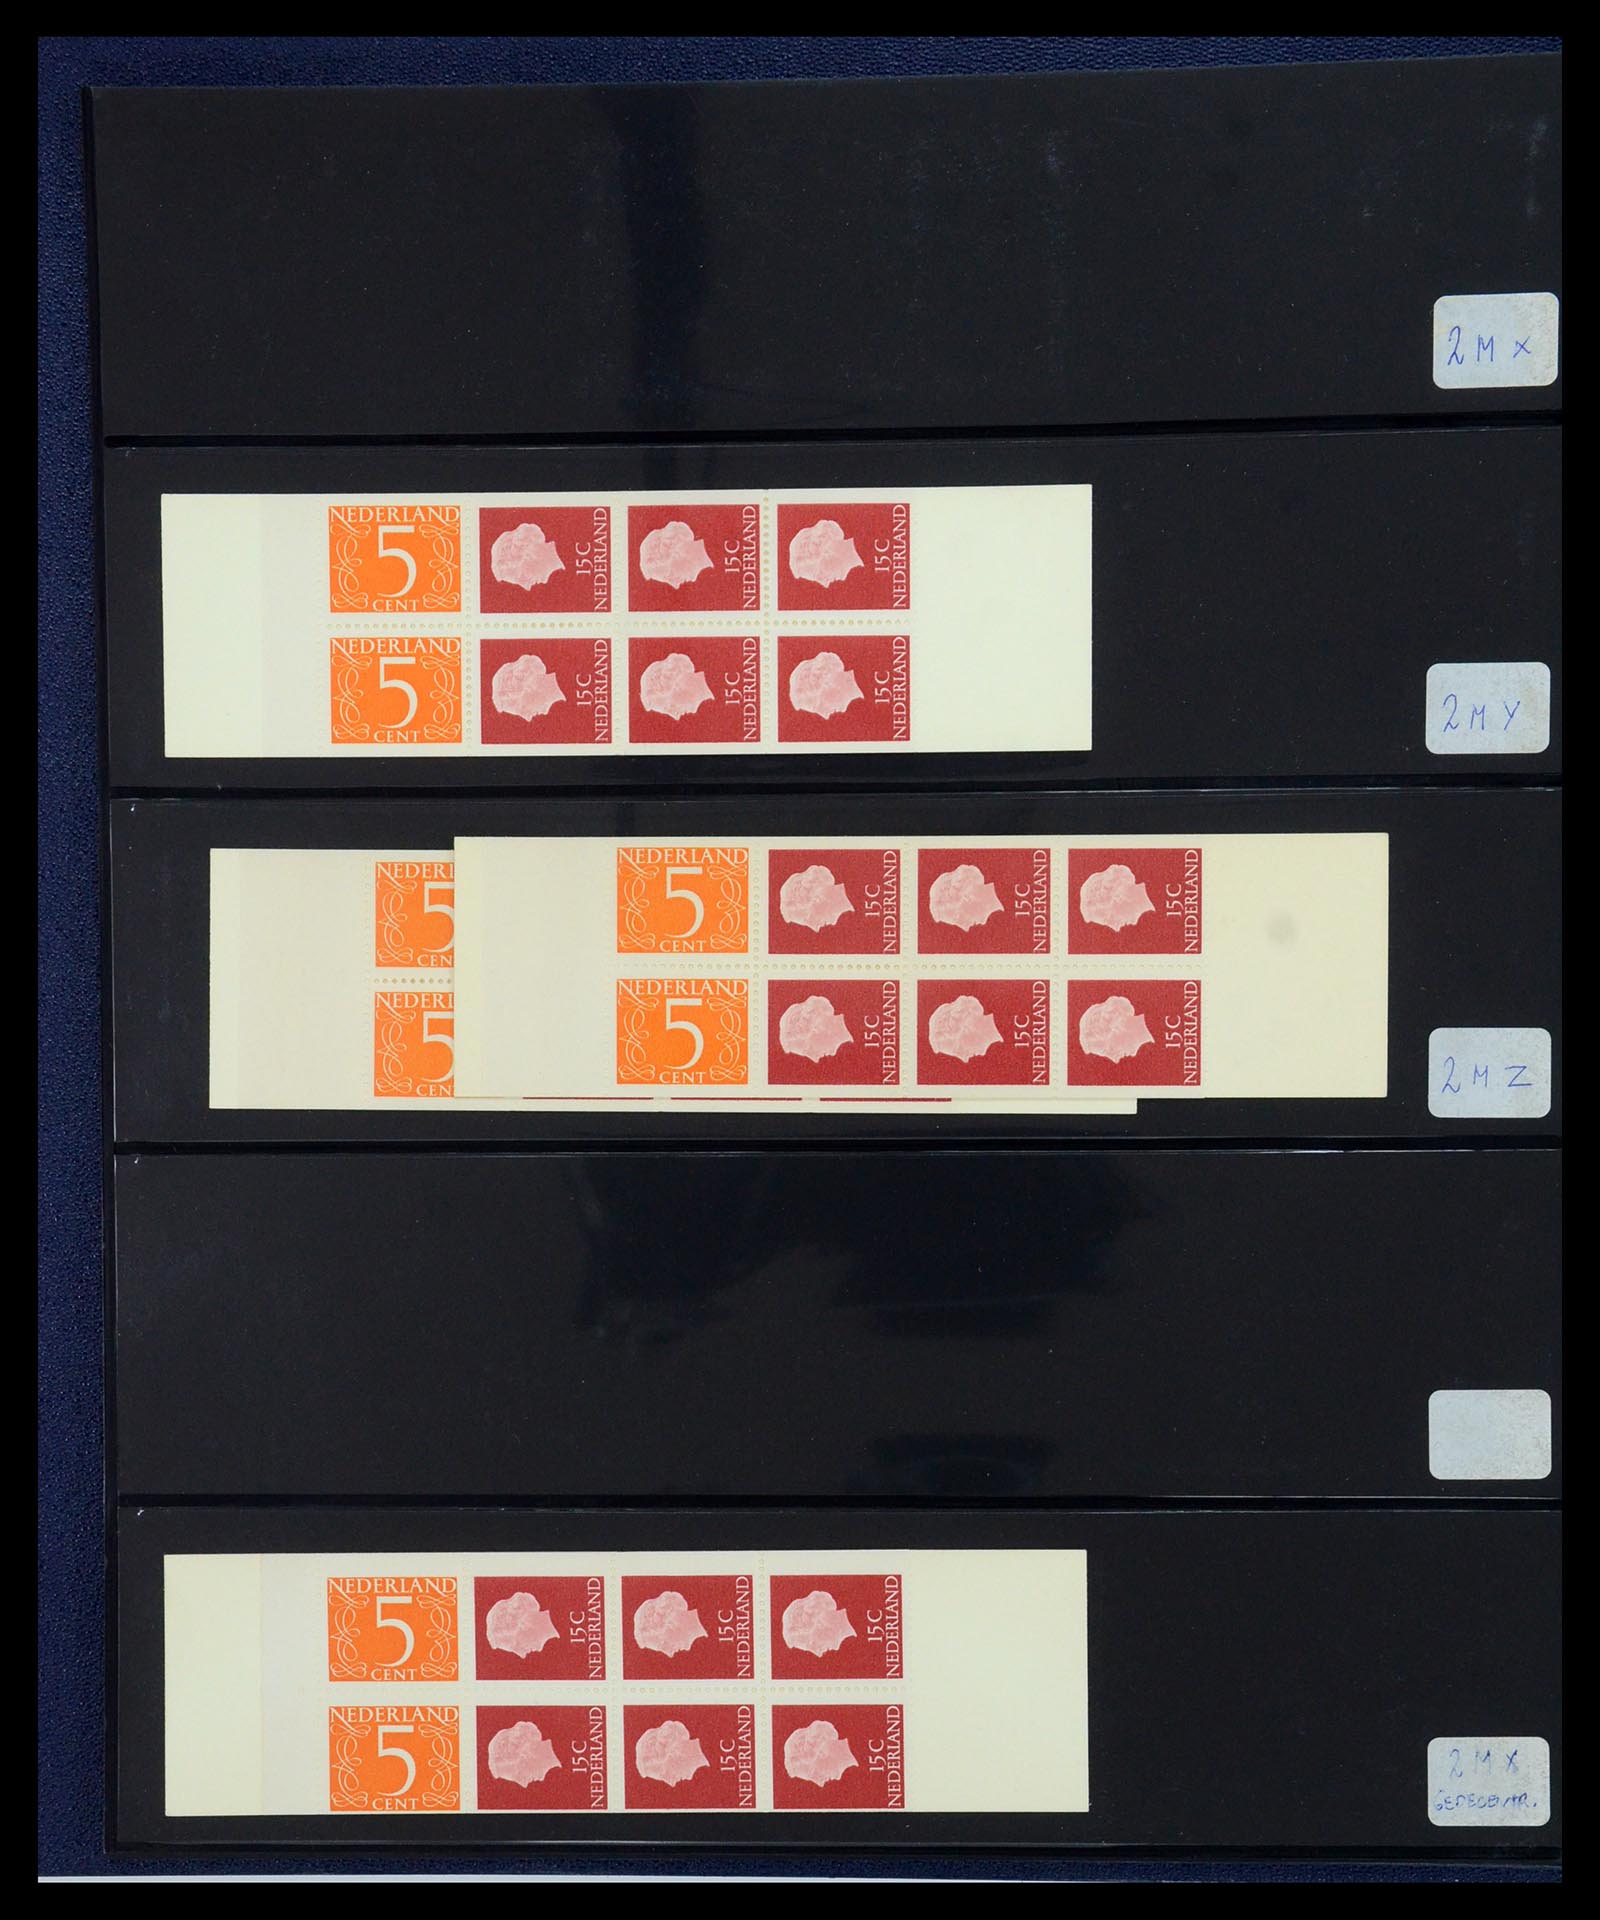 35821 008 - Stamp Collection 35821 Netherlands stamp booklets 1964-1983.